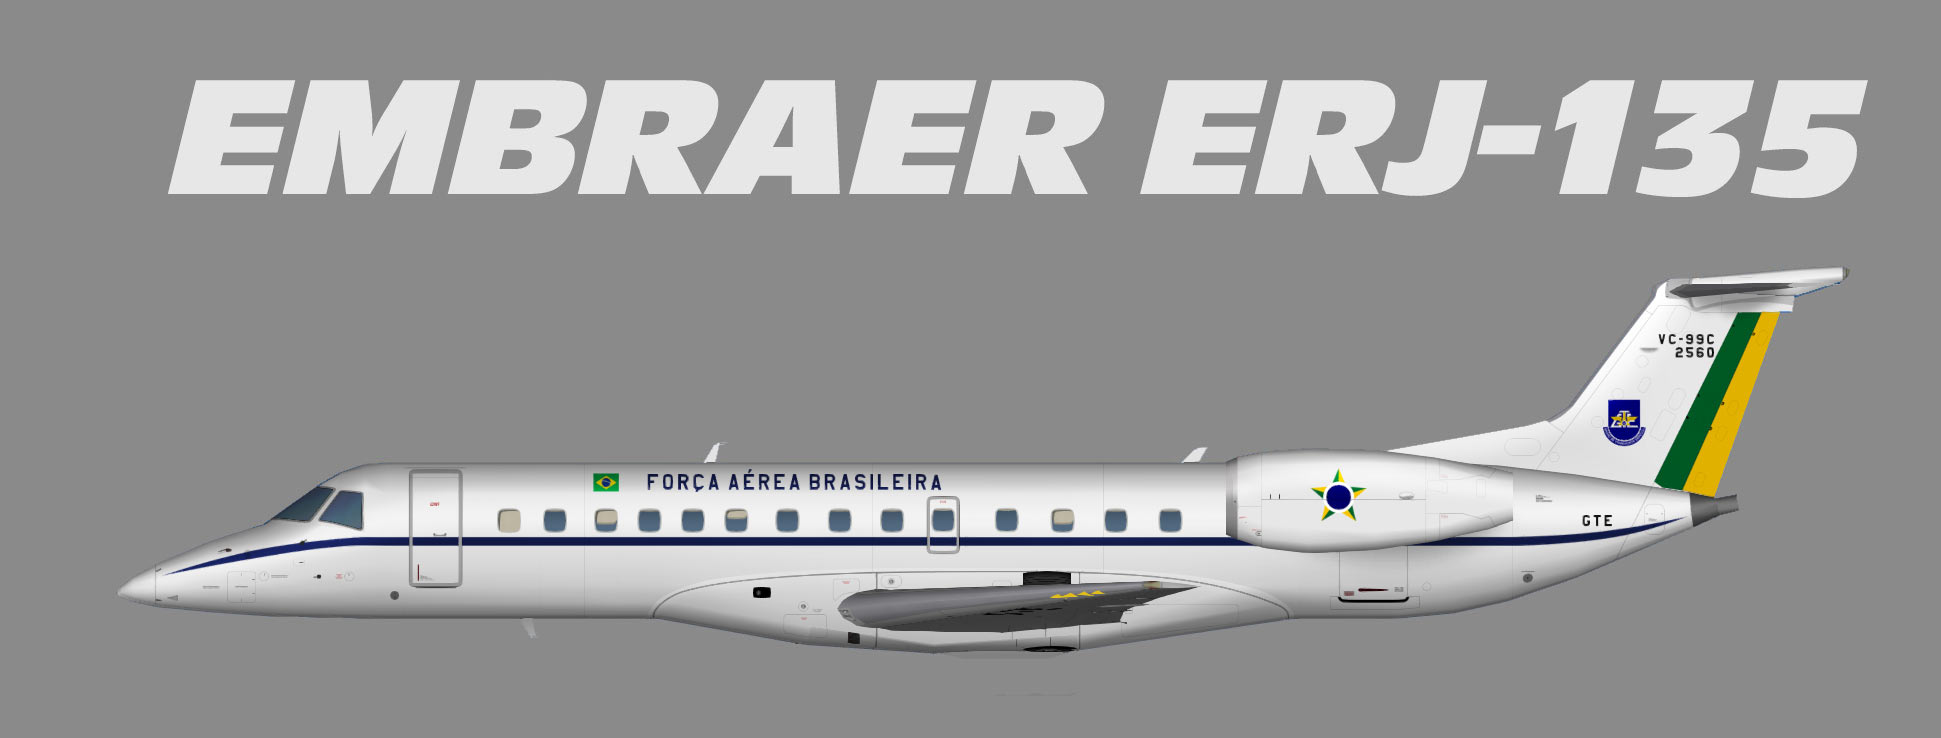 Forca Aerea Brasiliera Embraer ERJ-135 – Alexandre Alves